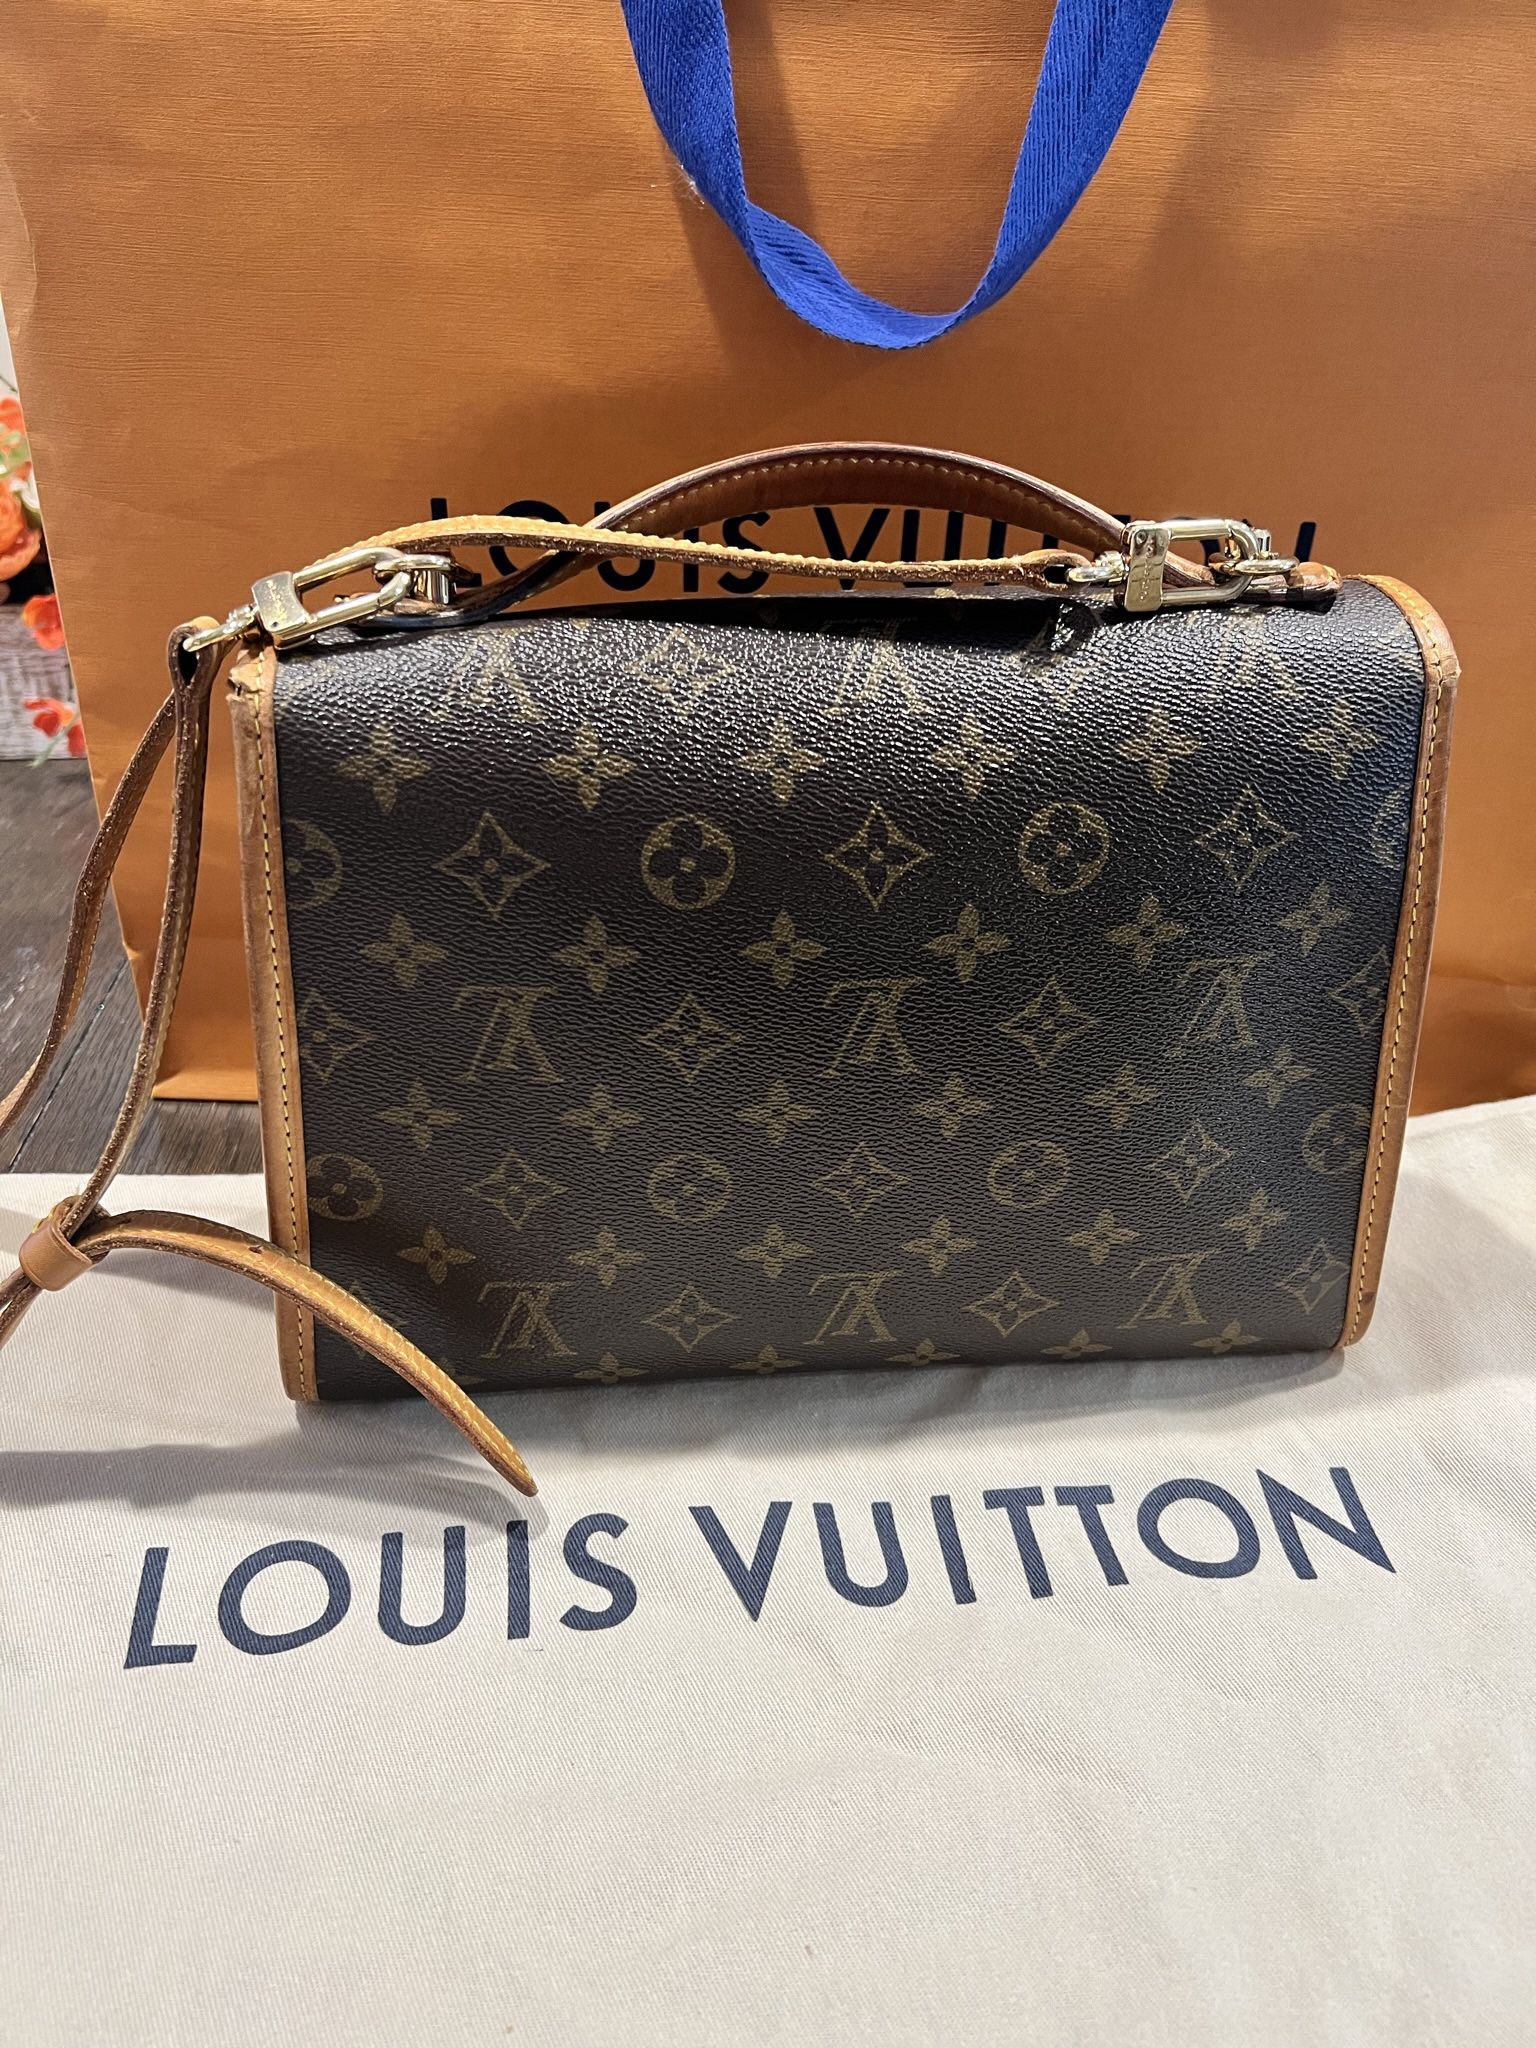 Louis Vuitton Multi Colored CHRISSIE shoulder Bag for Sale in San Antonio,  TX - OfferUp